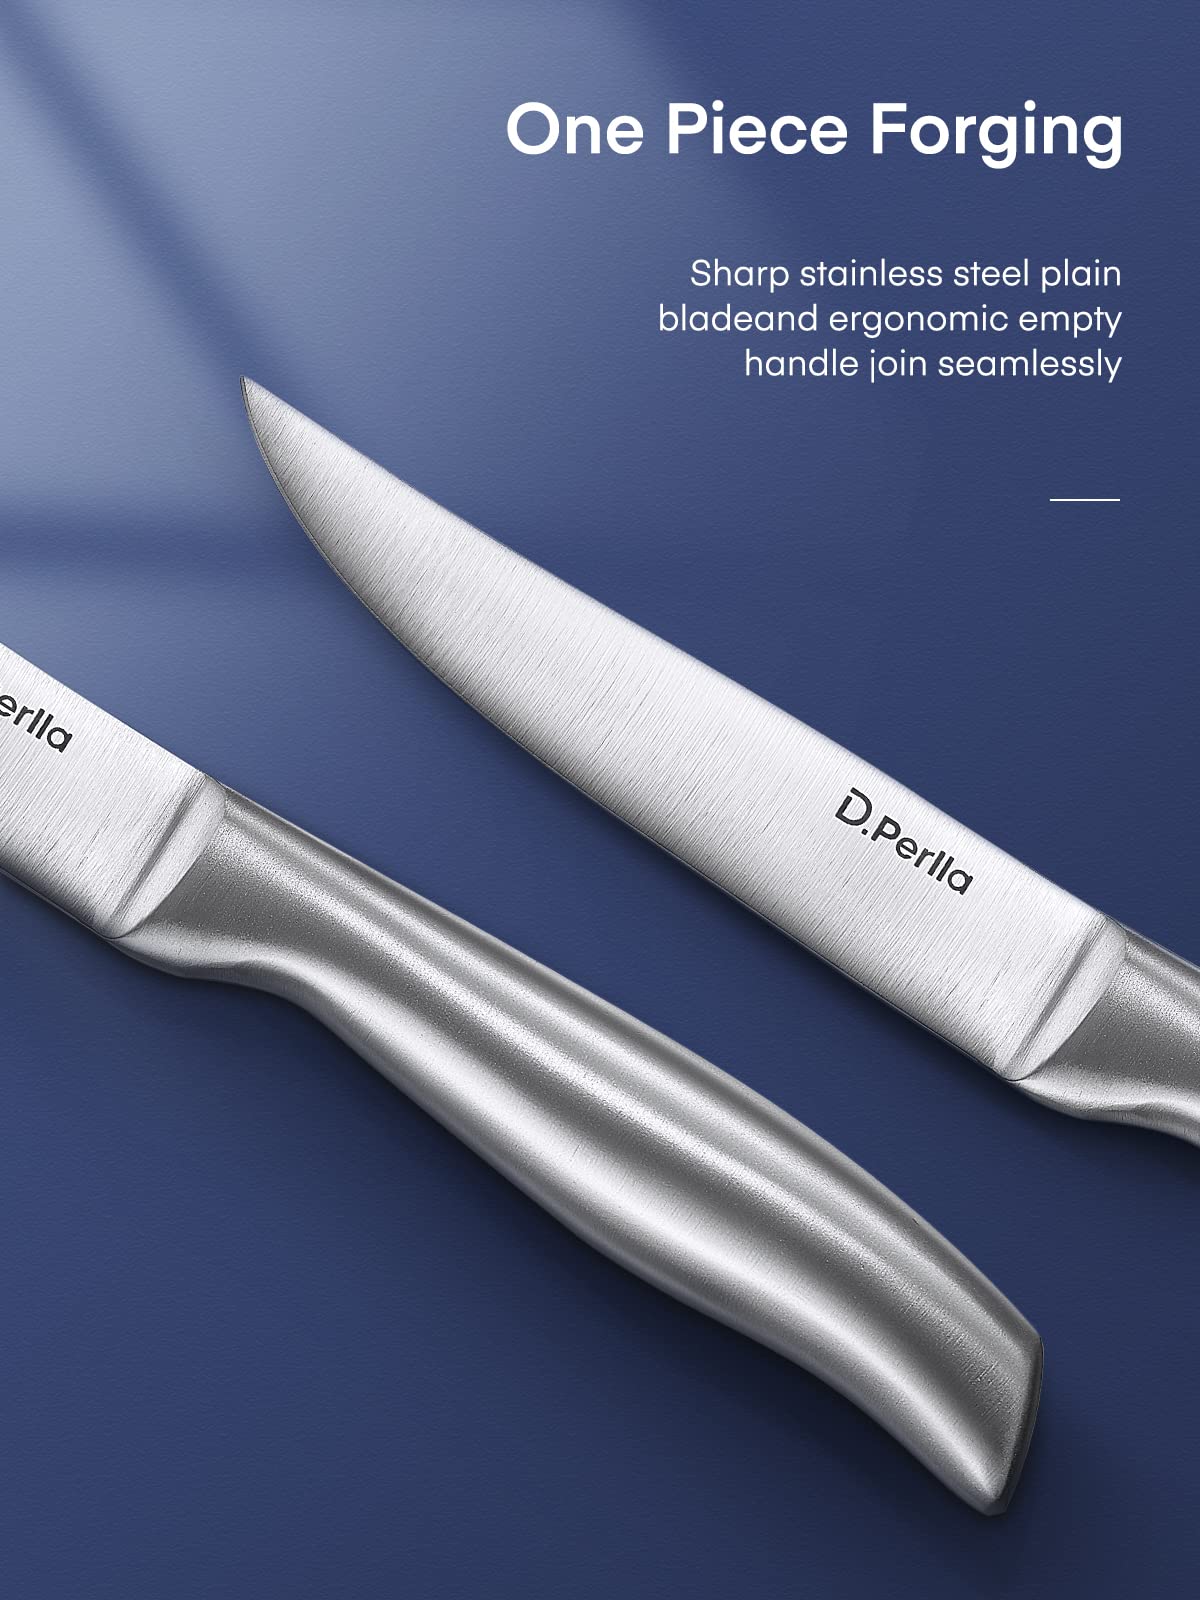 D.Perlla Steak Knives, Non Serrated Stainless Steel Sharp Steak Knife Set of 8 with Gift Box